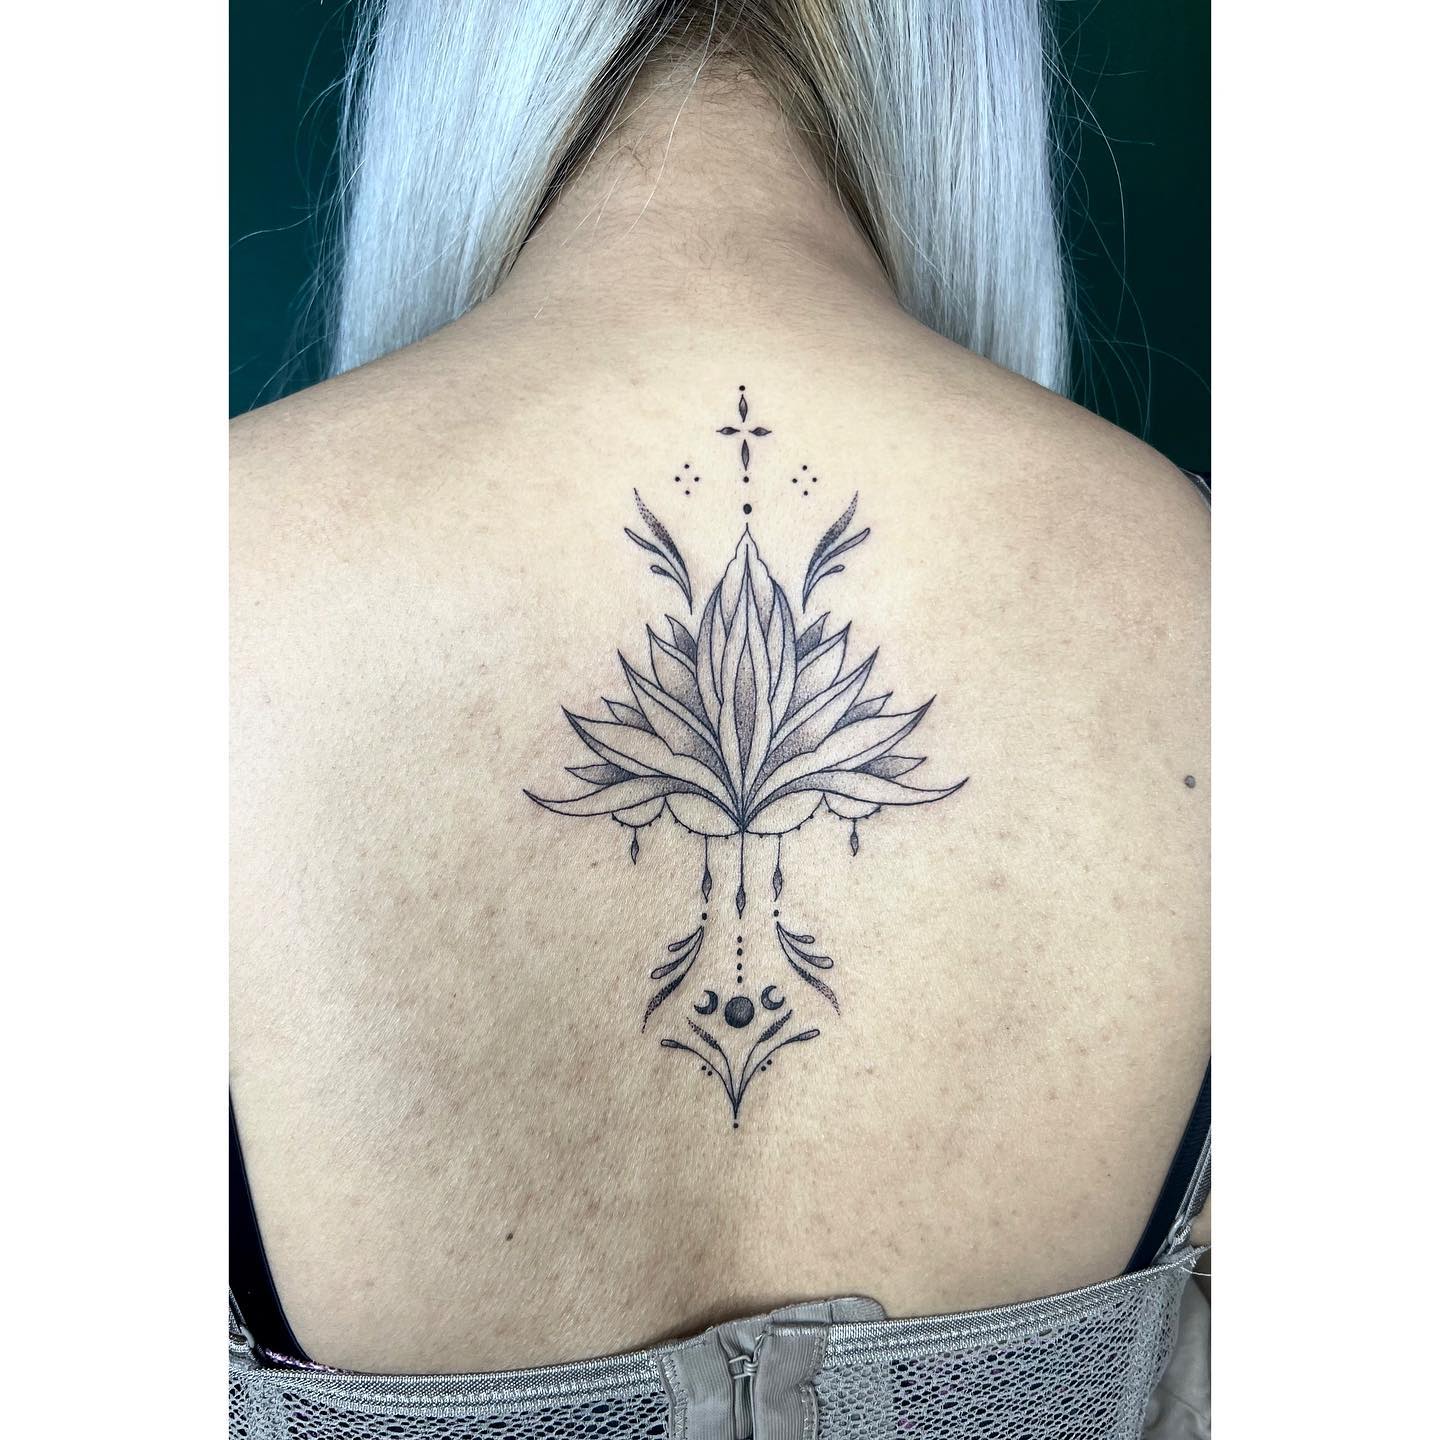 Symmetrical pattern tattoos - Tattoogrid.net